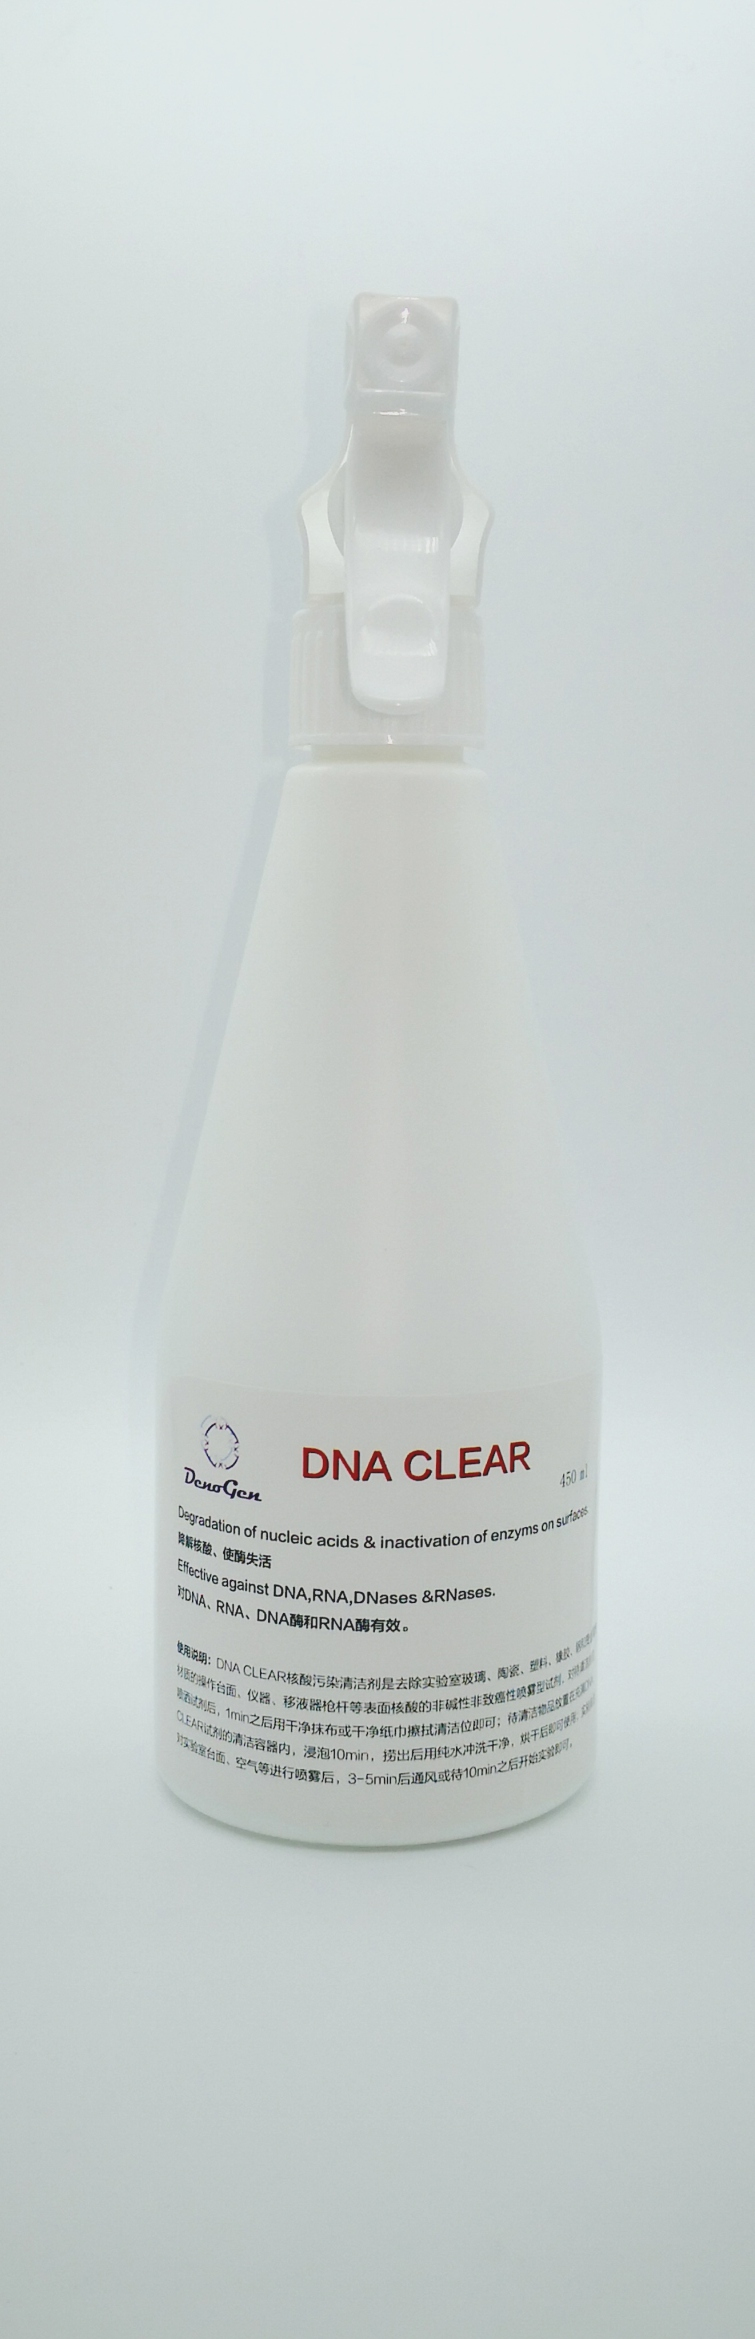 PCR CLEAR  核酸污染清洁剂 